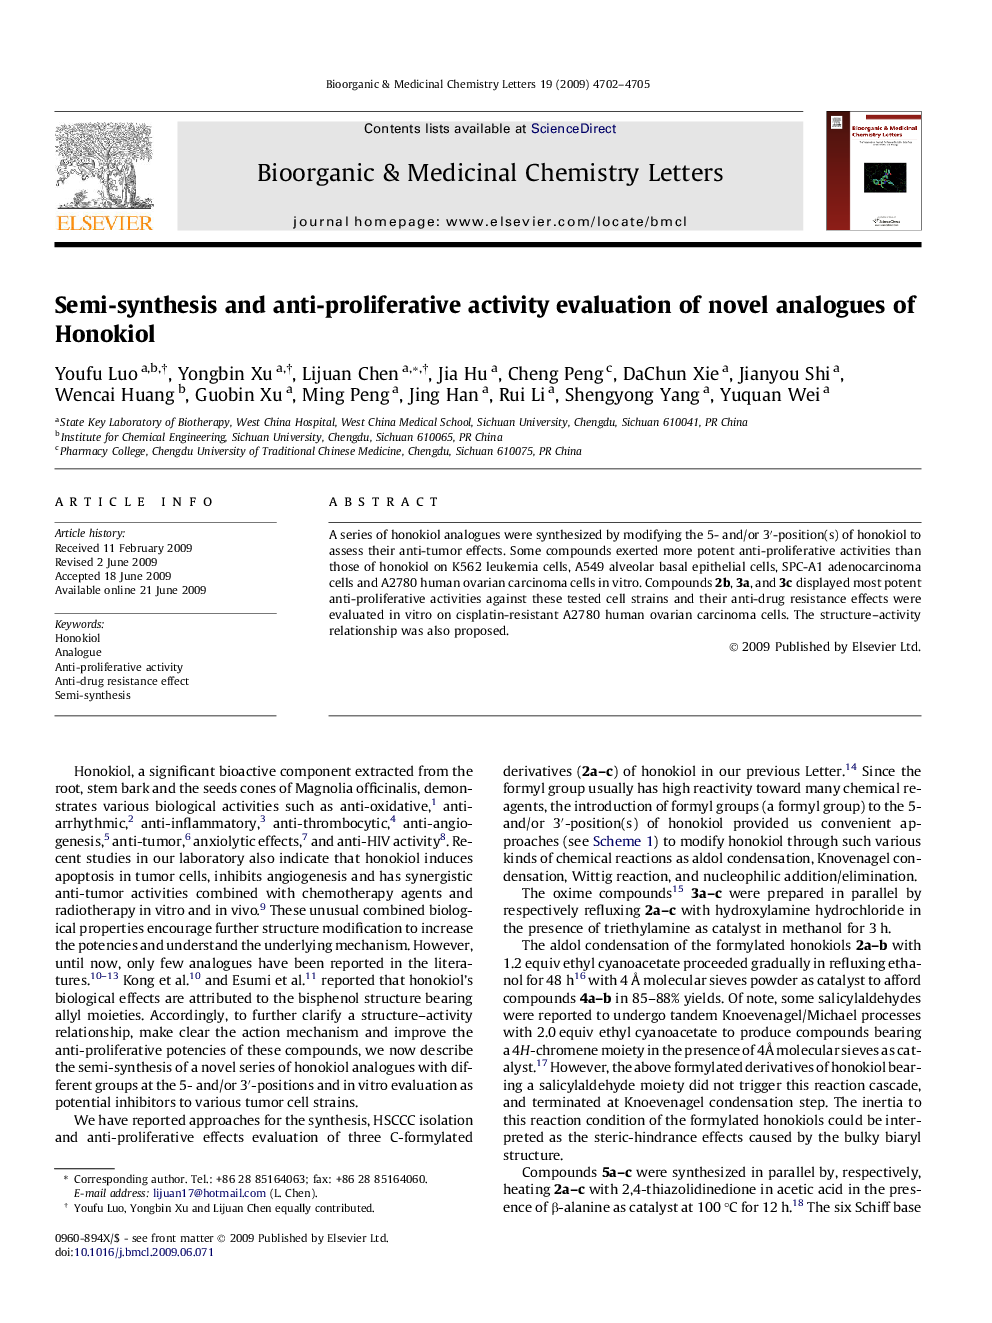 Semi-synthesis and anti-proliferative activity evaluation of novel analogues of Honokiol